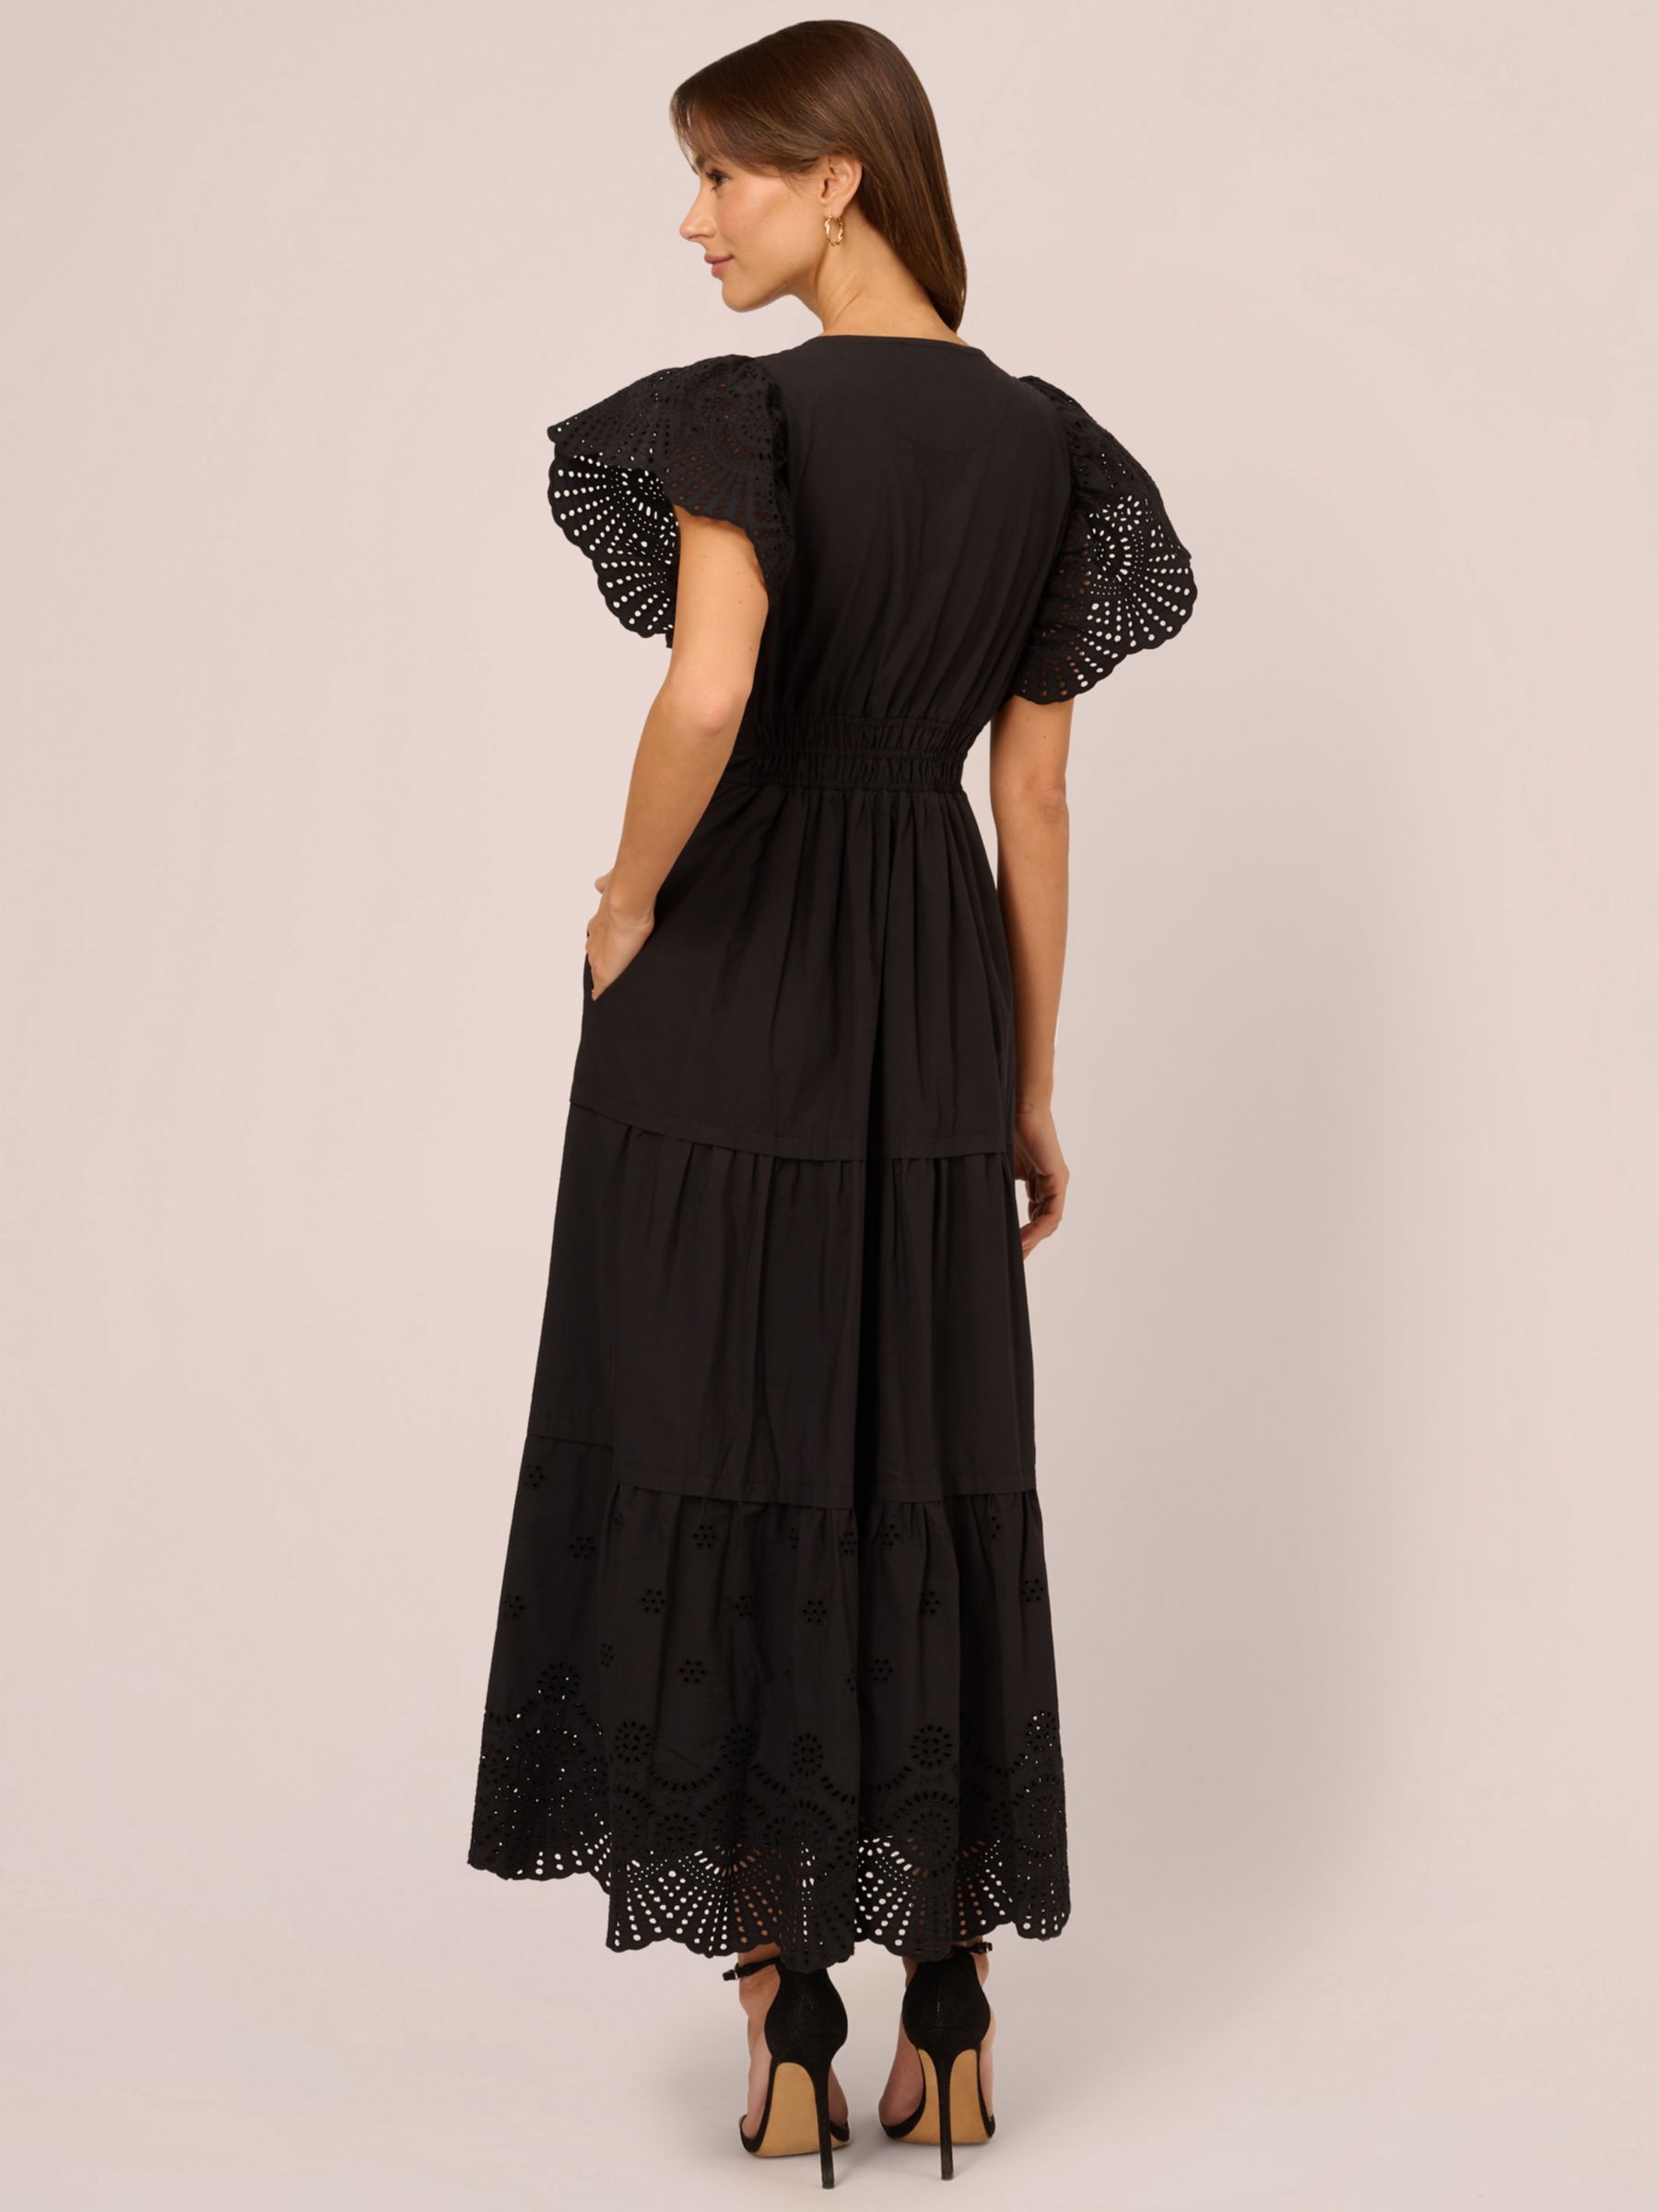 Adrianna Papell Eyelet Trim Dress, Black, XS